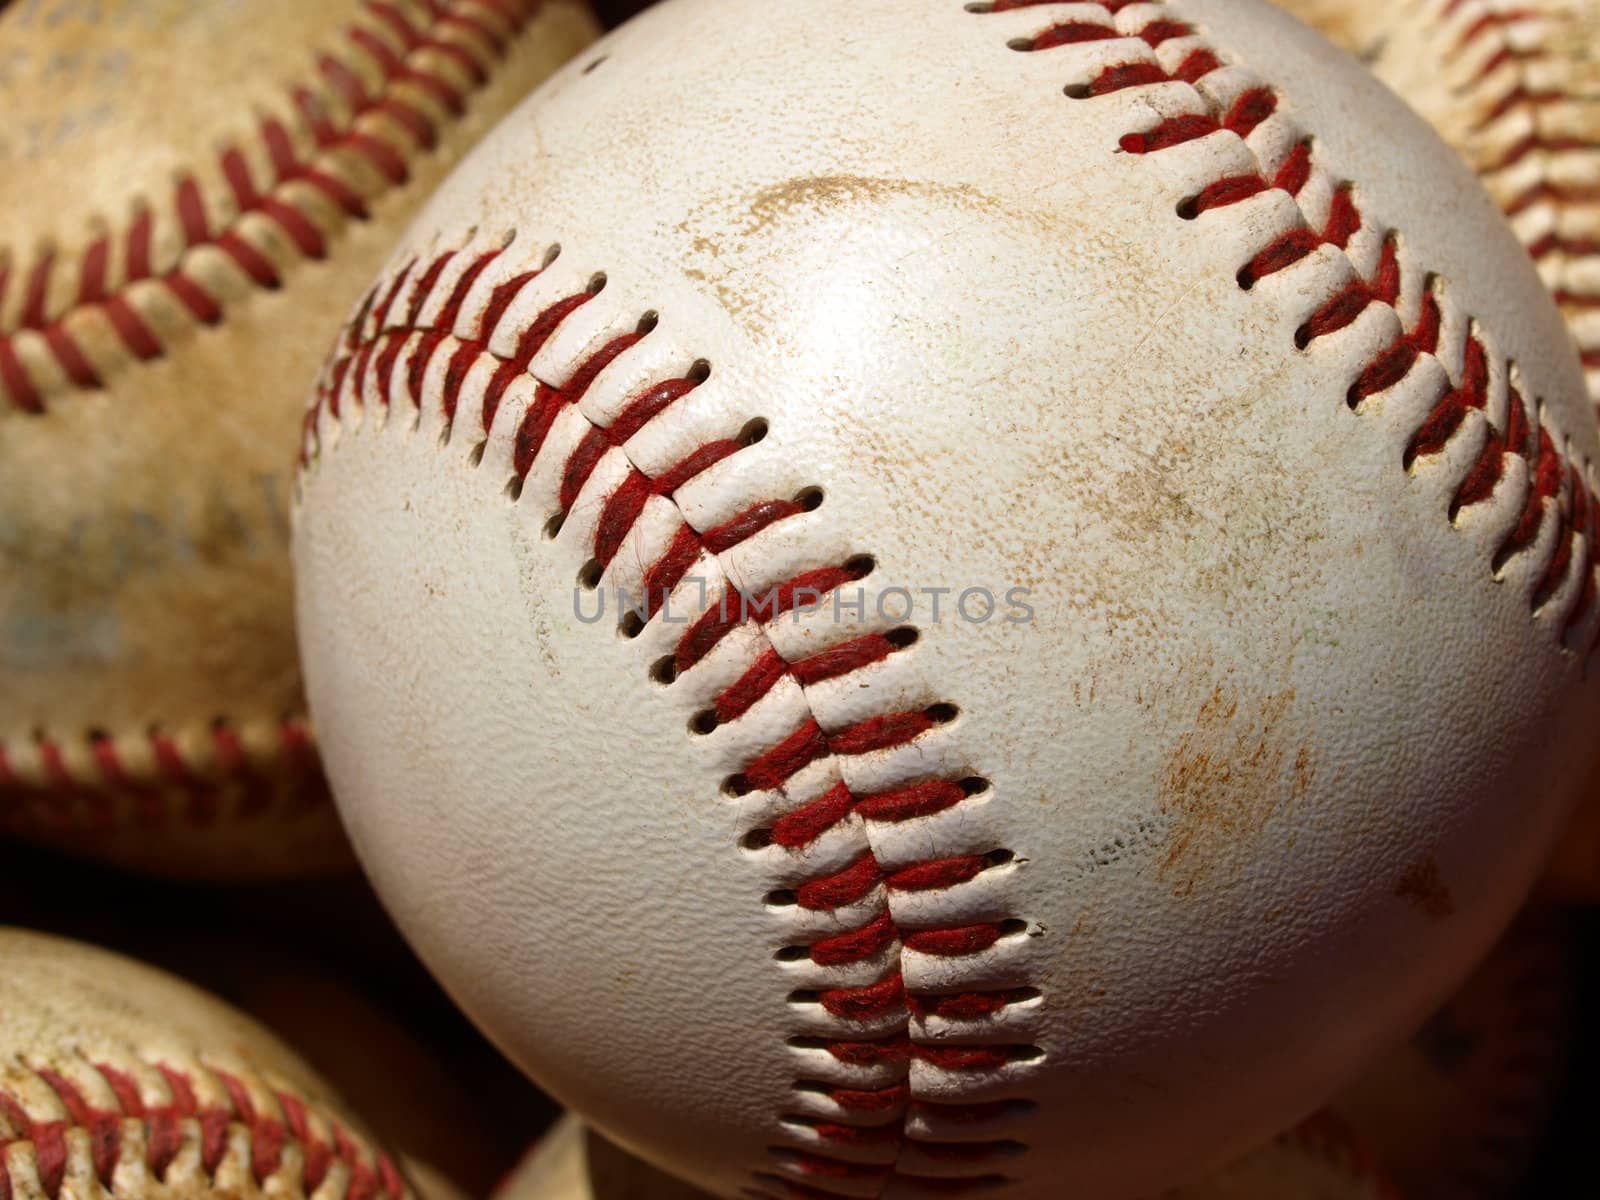 baseball up close by northwoodsphoto